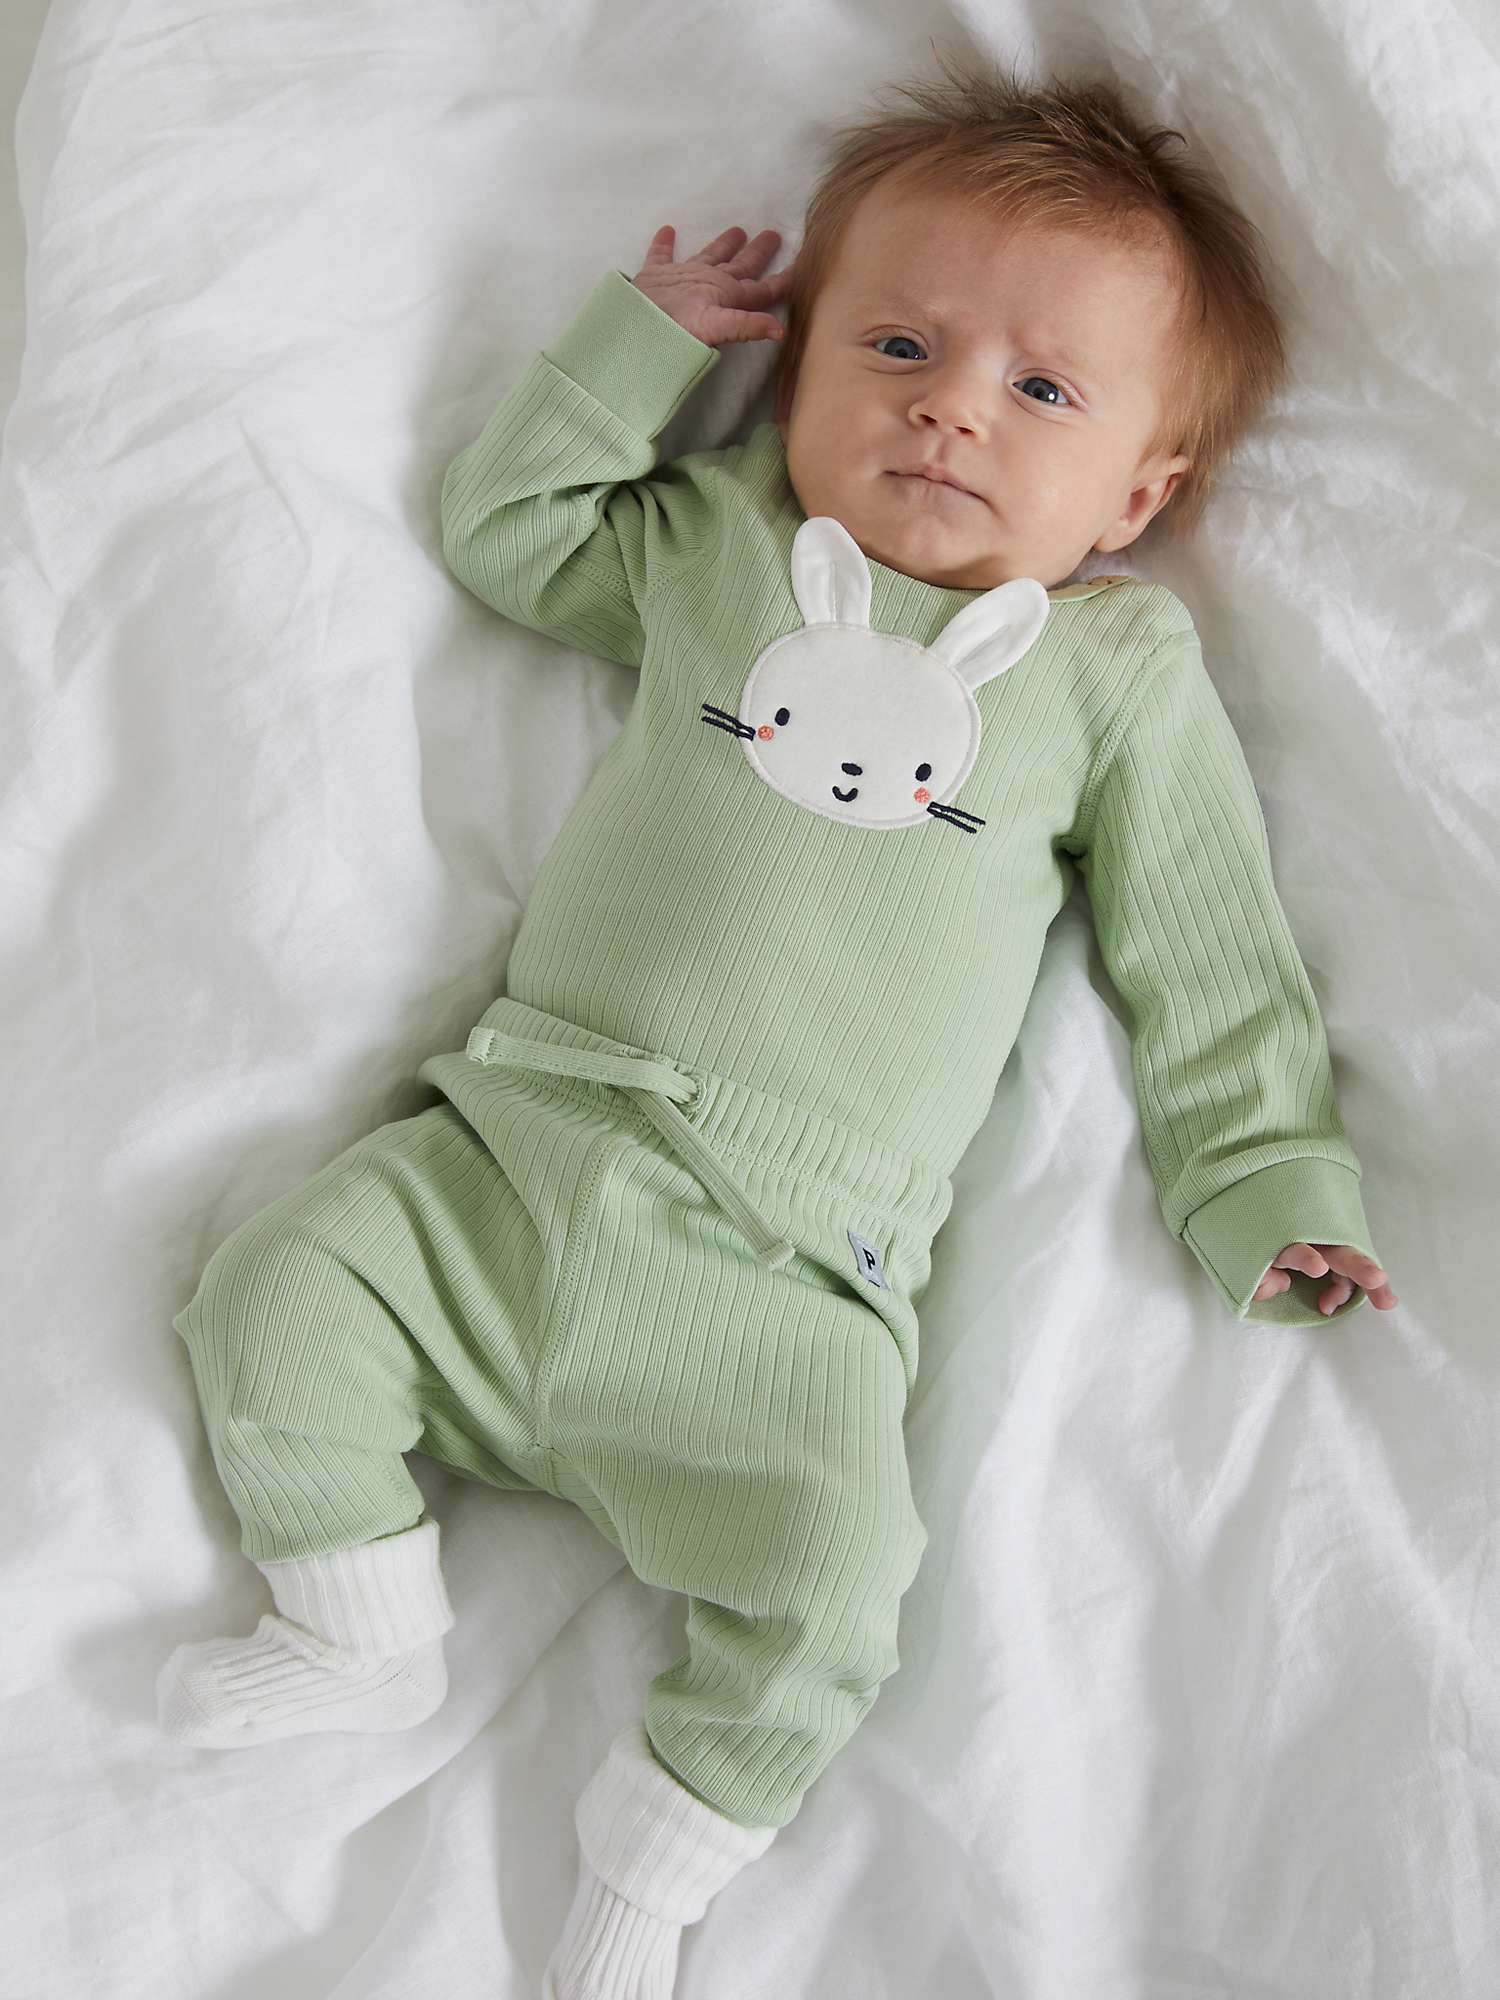 Buy Polarn O. Pyret Baby Organic Cotton Rib Bunny Applique Bodysuit, Green Online at johnlewis.com